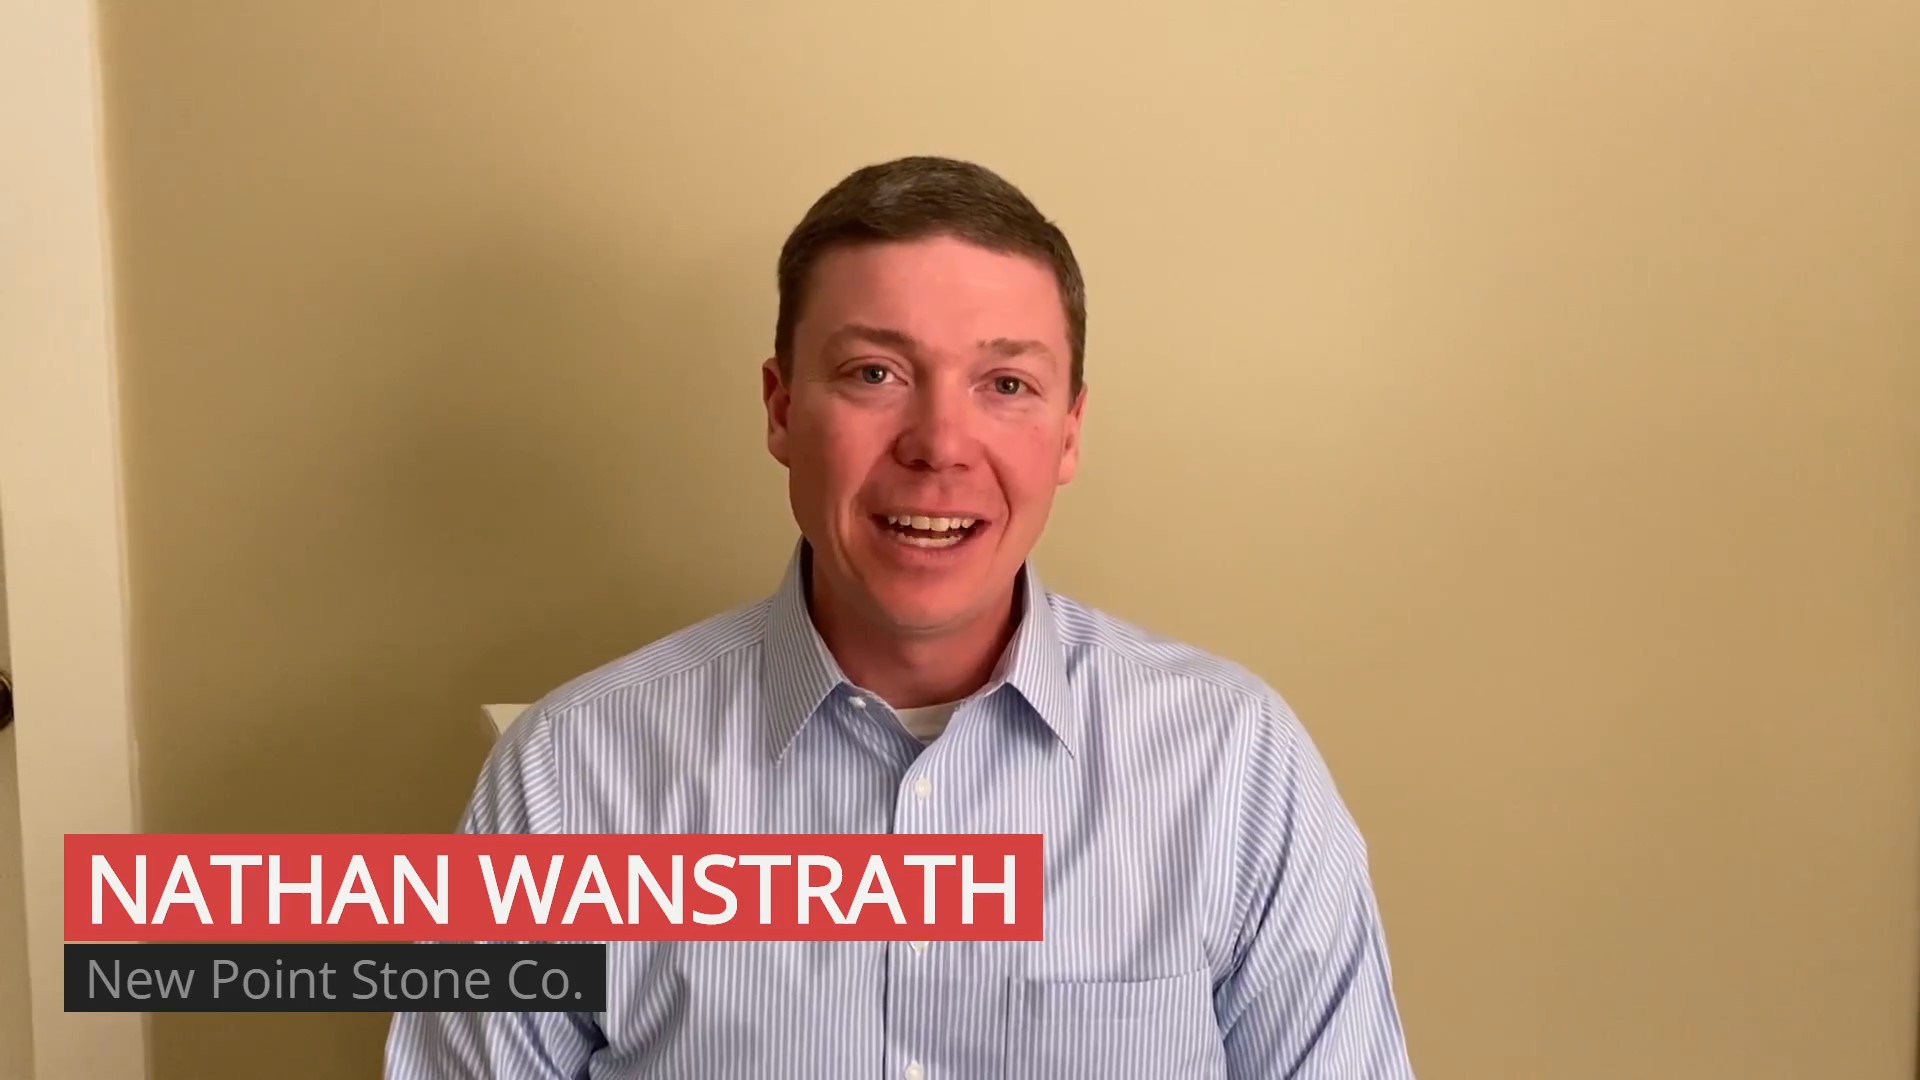 Nathan Wanstrath, New Point Stone Co. receives 2020 Keystone Award